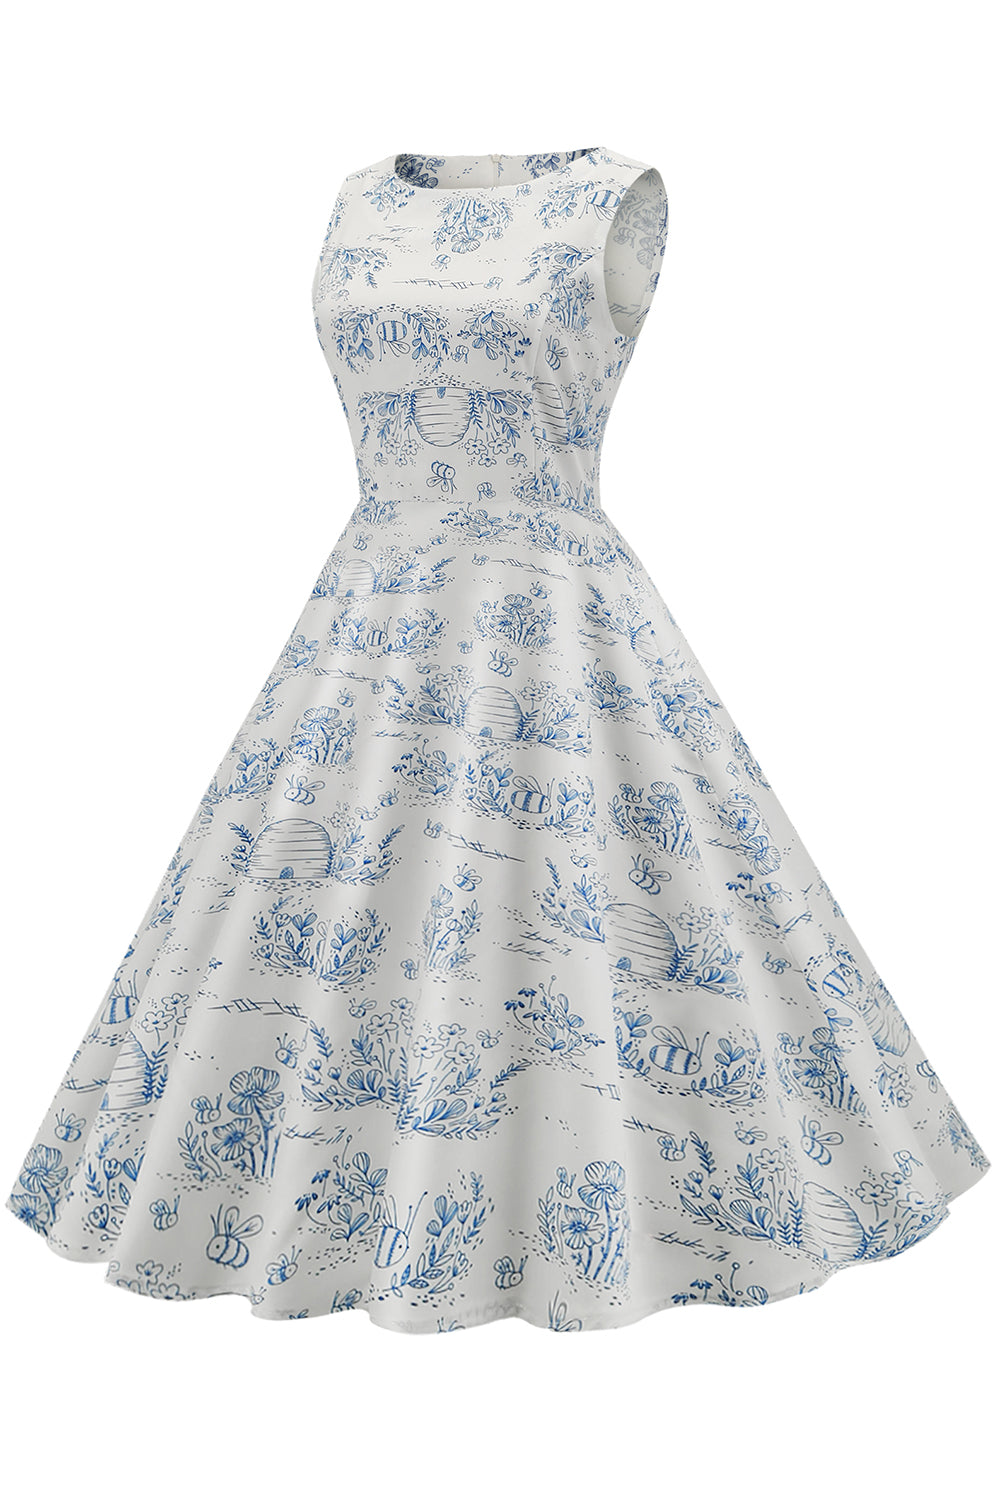 robe-annee-80-a-imprime-florale-des-annees-1950